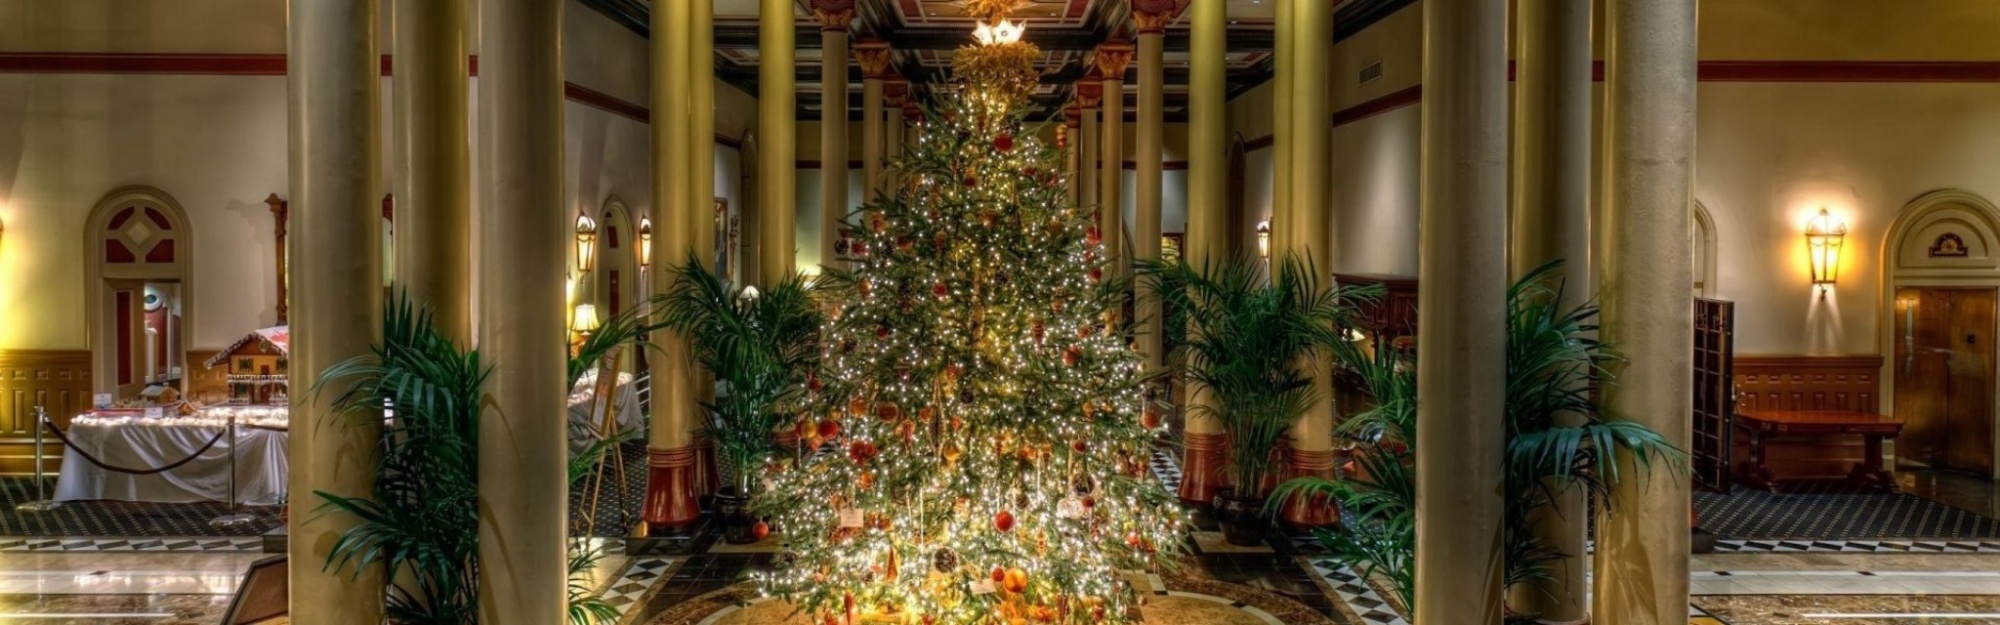 Tree Large Christmas Hall Columns Holiday Gifts